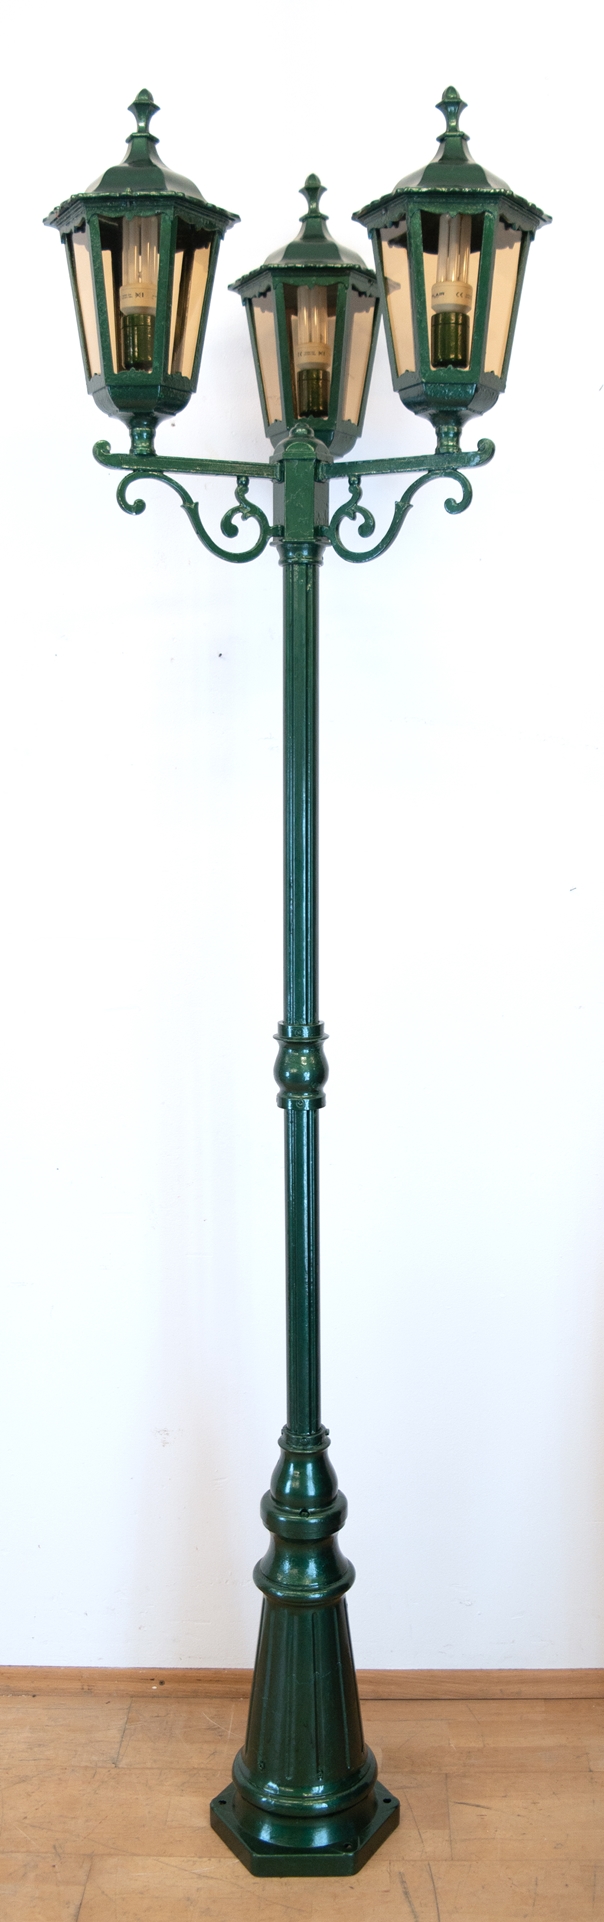 Gartenlaterne, 3-armig, Aluminium, grün gefasst, 3 Laternenköpfe sechseckig, verglast, H. 220 cm, D